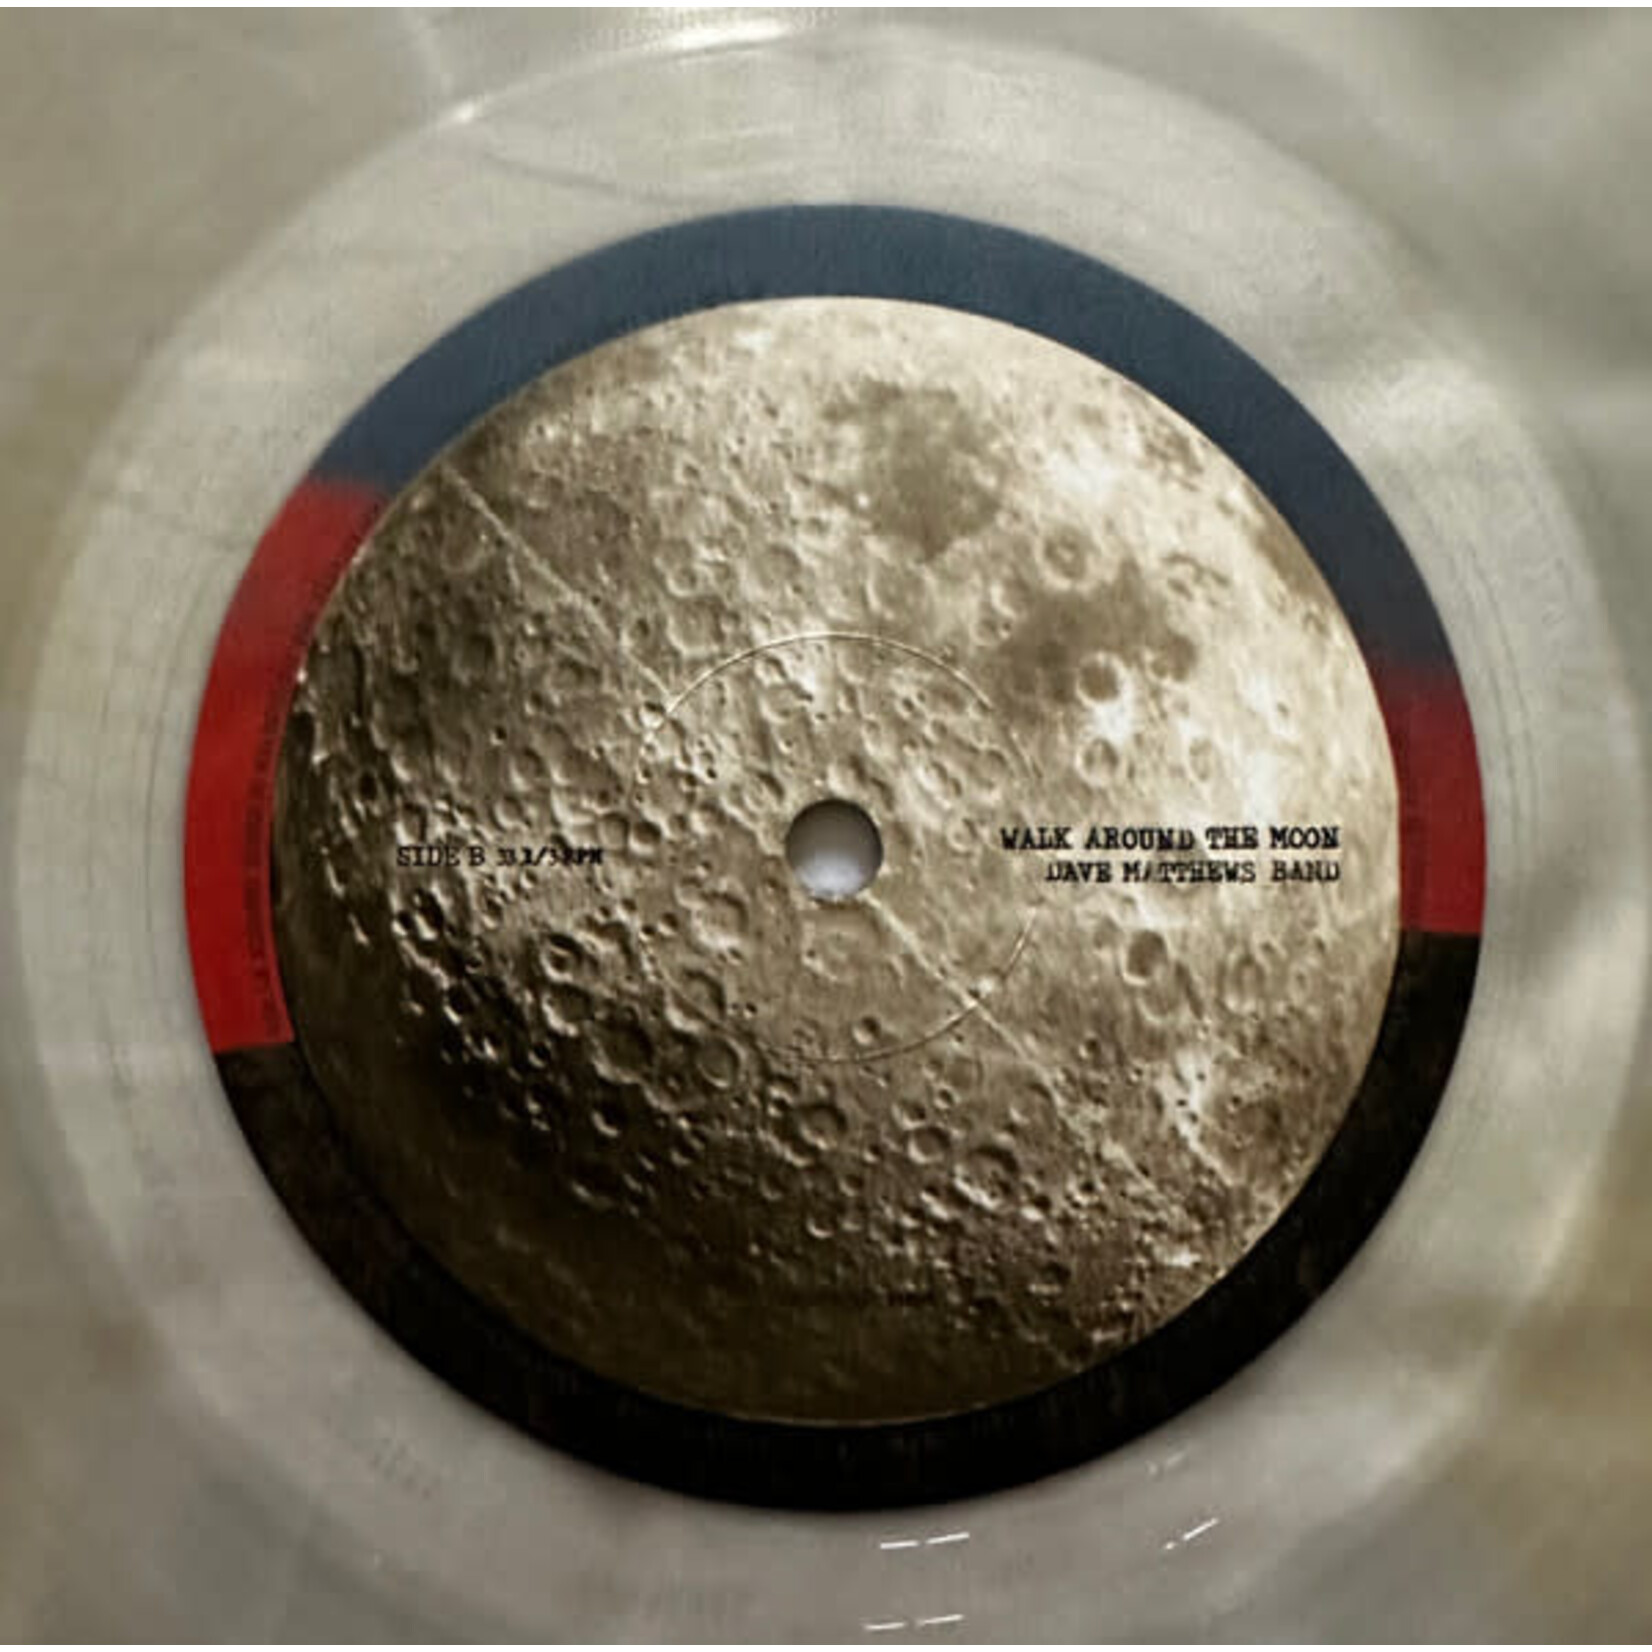 [New] Dave Band Matthews - Walk Around The Moon (clear vinyl, indie exclusive)